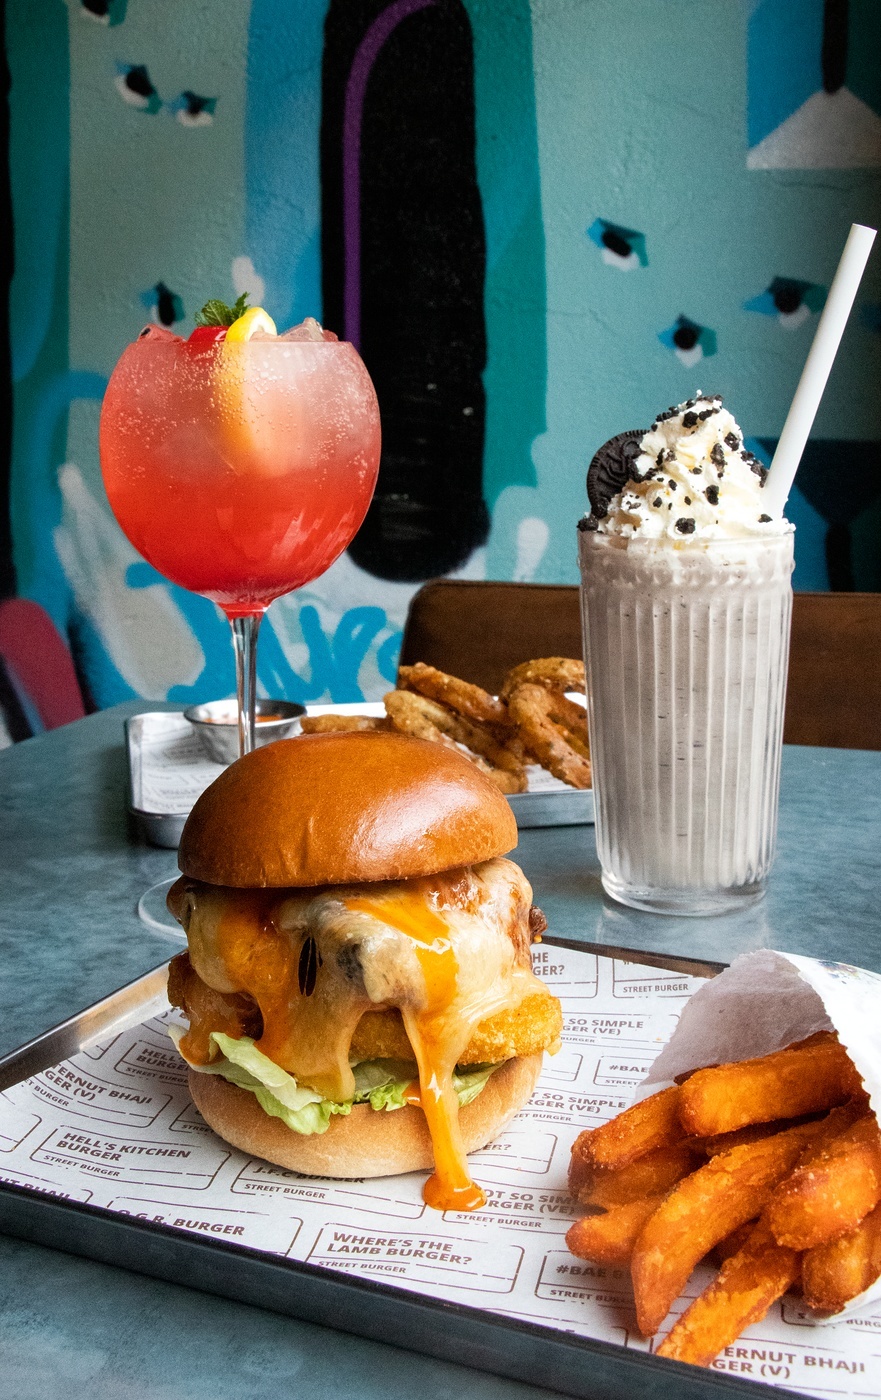 Images Gordon Ramsay Street Burger - The O2